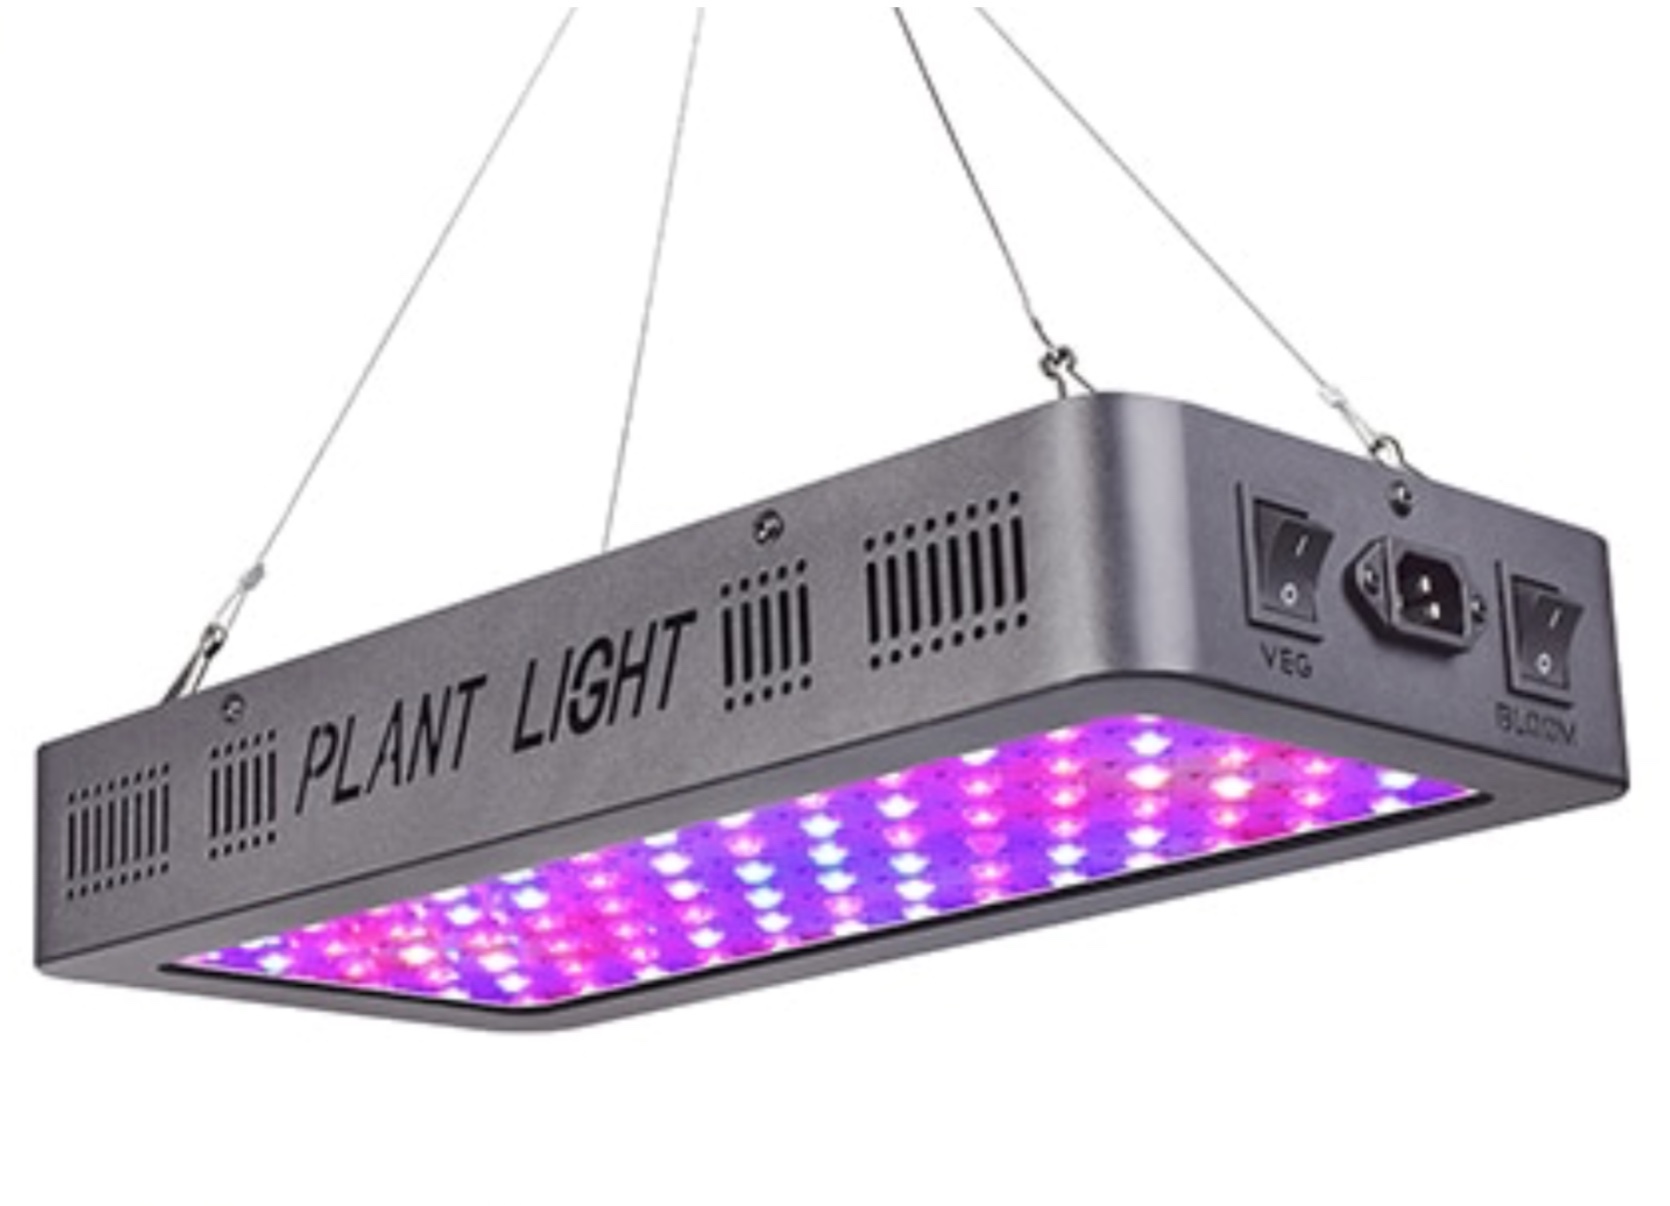 Plant Light 240W